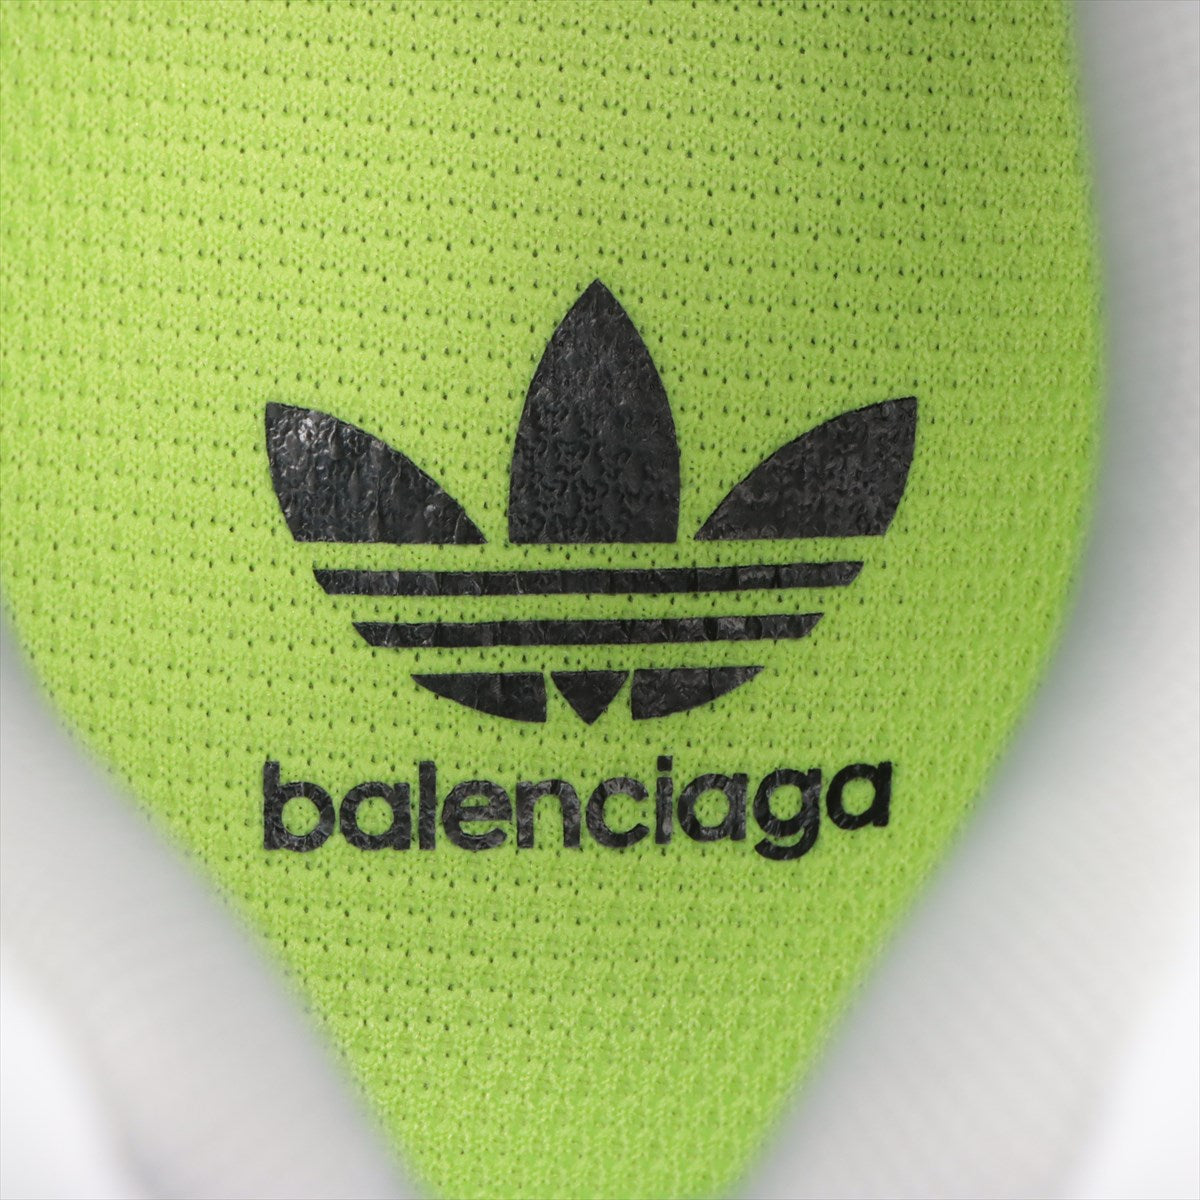 Balenciaga x Adidas Triple S 23SS 網眼 x 皮革運動鞋 男士 灰色 x 黃色 712821 盒式包